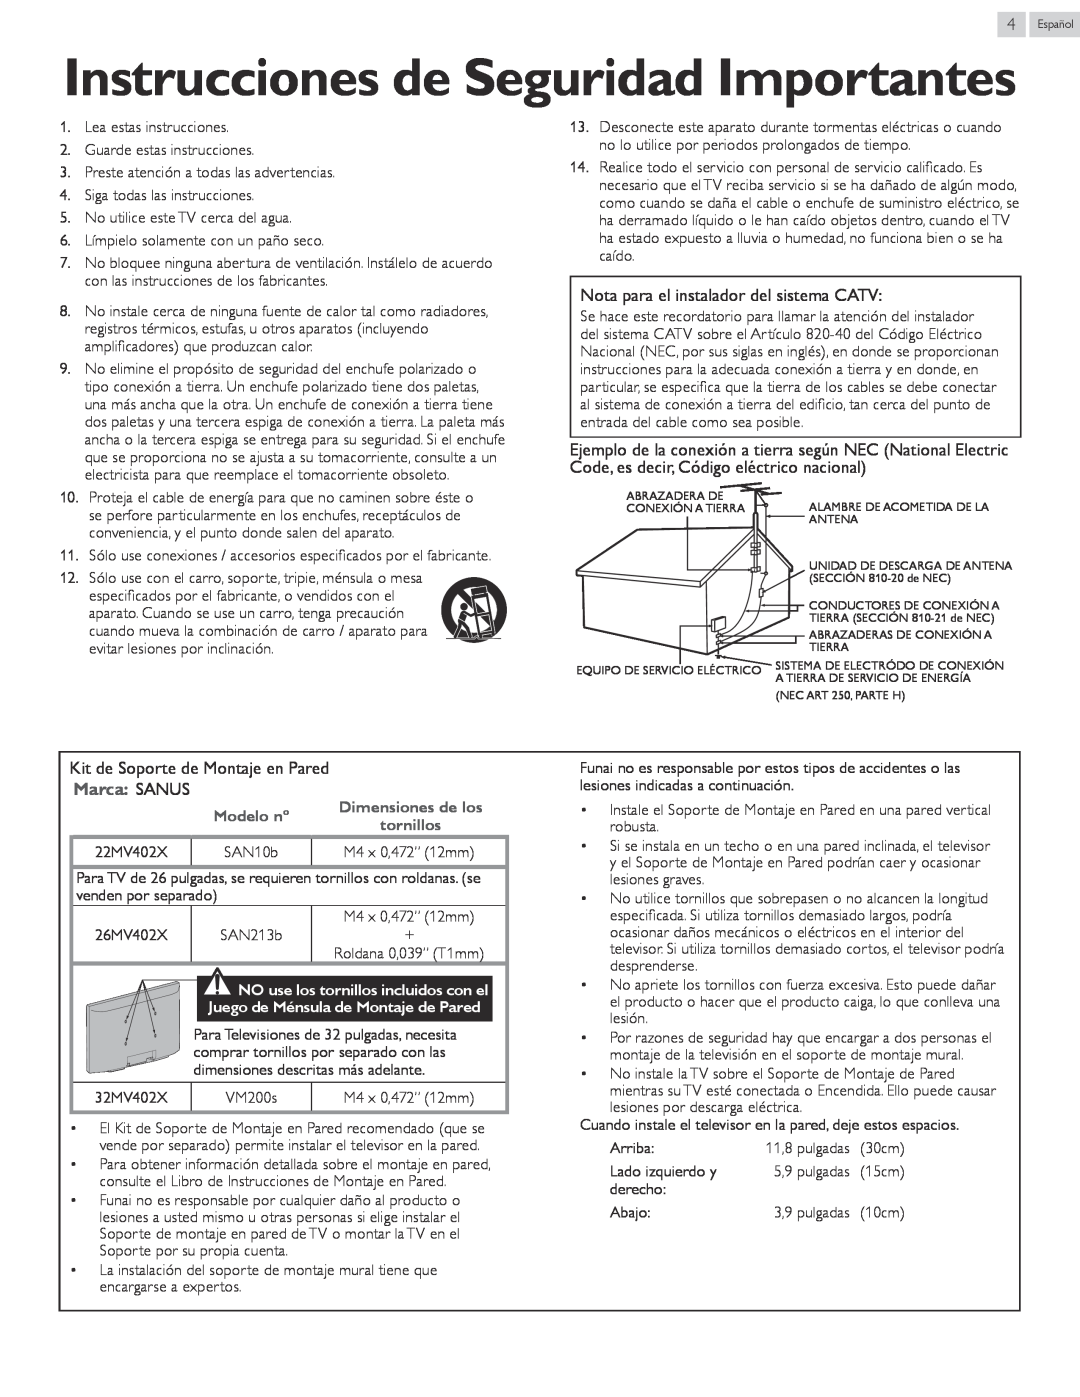 Magnavox 32MV402X Instrucciones de Seguridad Importantes, Nota para el instalador del sistema CATV, Marca SANUS, Modelo nº 